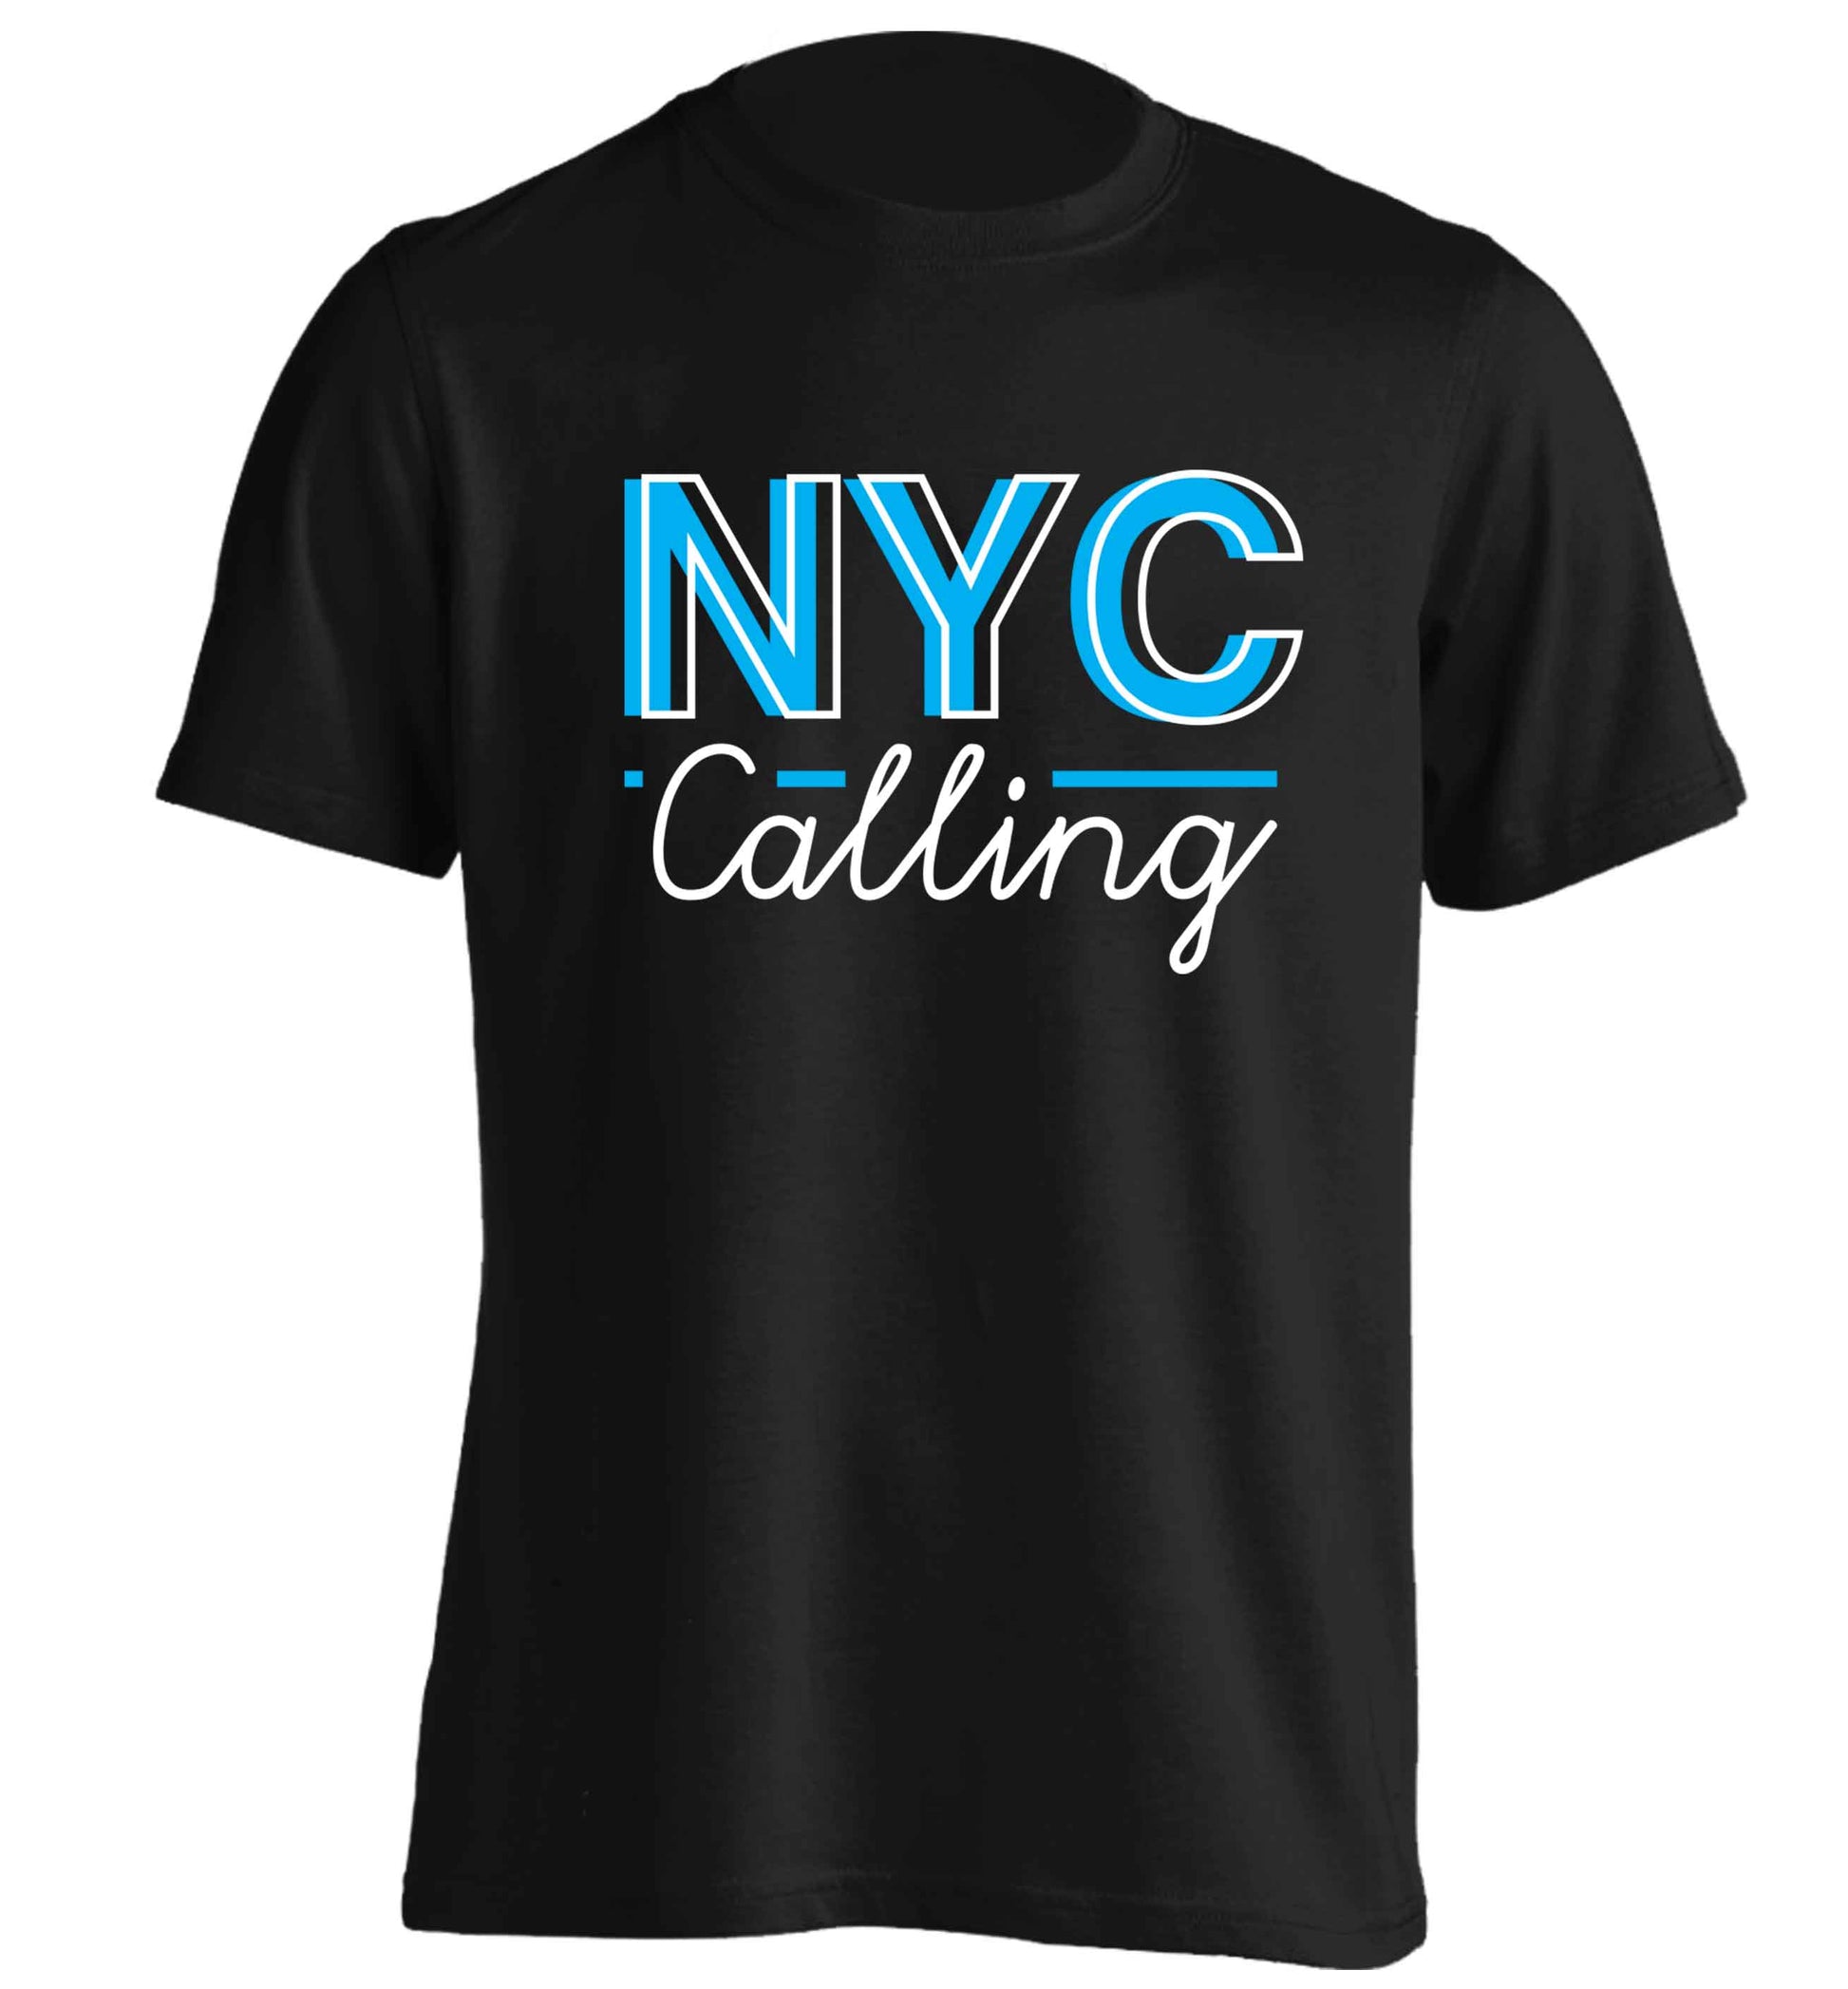 NYC calling adults unisex black Tshirt 2XL